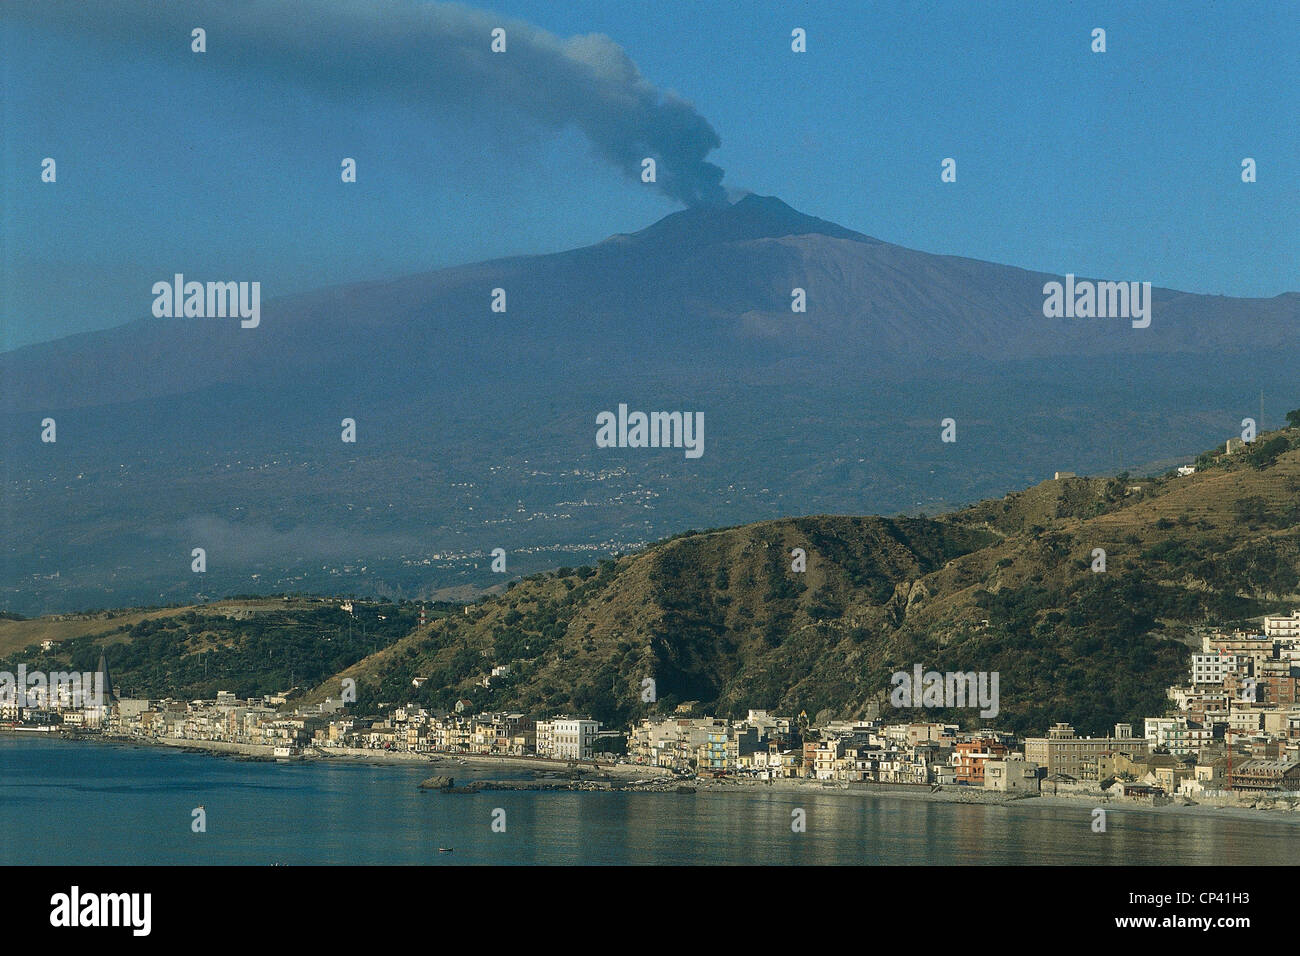 Sicily - Catania - Etna view with smoke plumes. Stock Photo